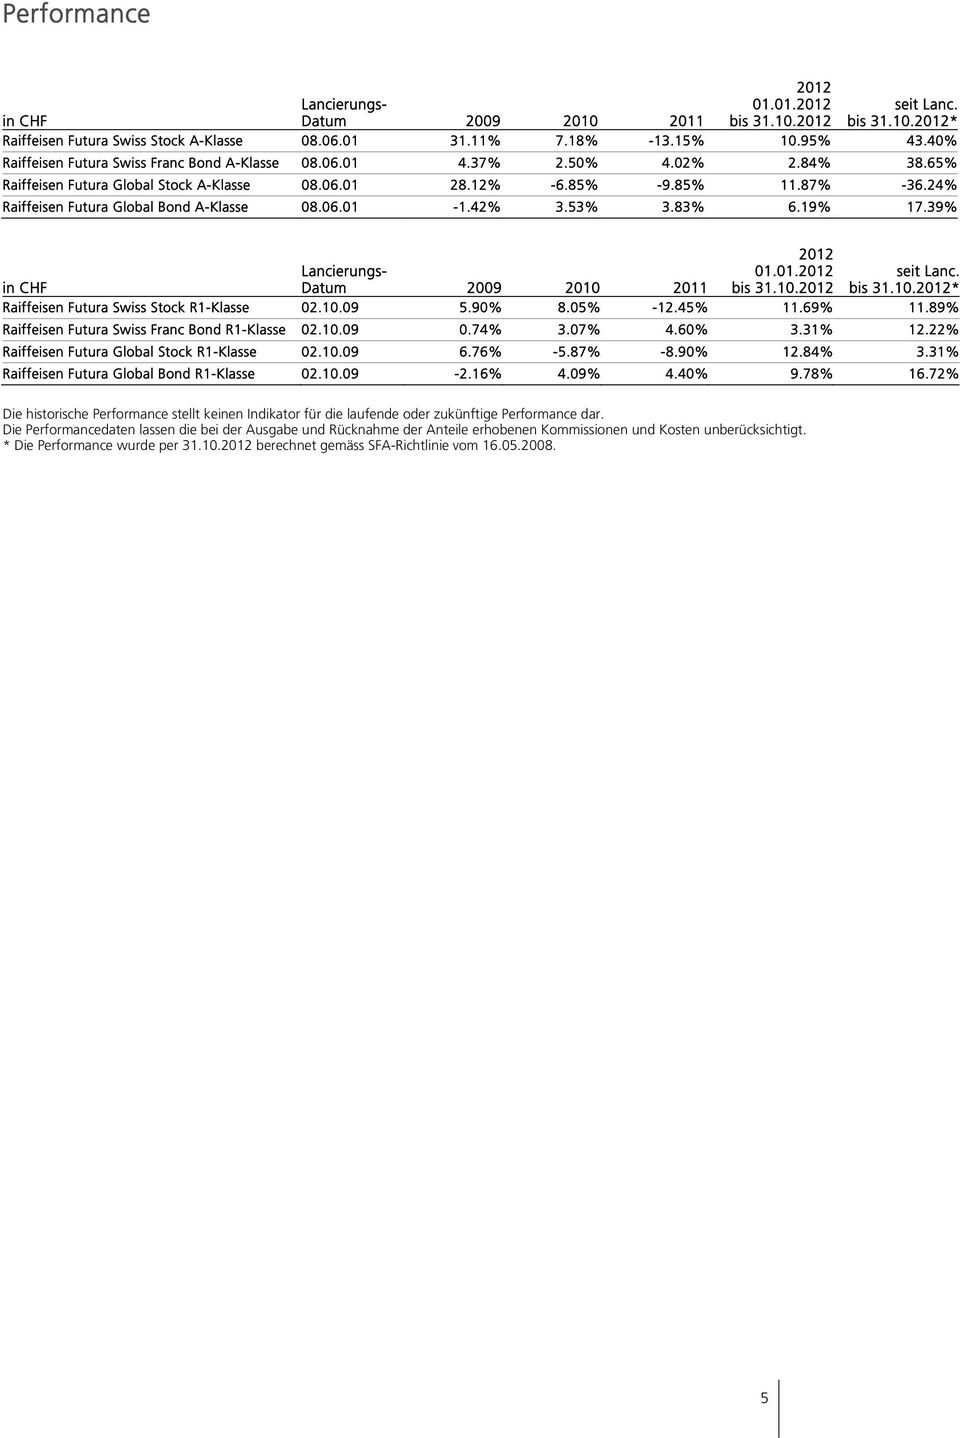 24% Raiffeisen Futura Global Bond A-Klasse 08.06.01-1.42% 3.53% 3.83% 6.19% 17.39% in CHF Lancierungs- Datum 2009 2010 2011 2012 01.01.2012 bis 31.10.2012 seit Lanc. bis 31.10.2012* Raiffeisen Futura Swiss Stock R1-Klasse 02.